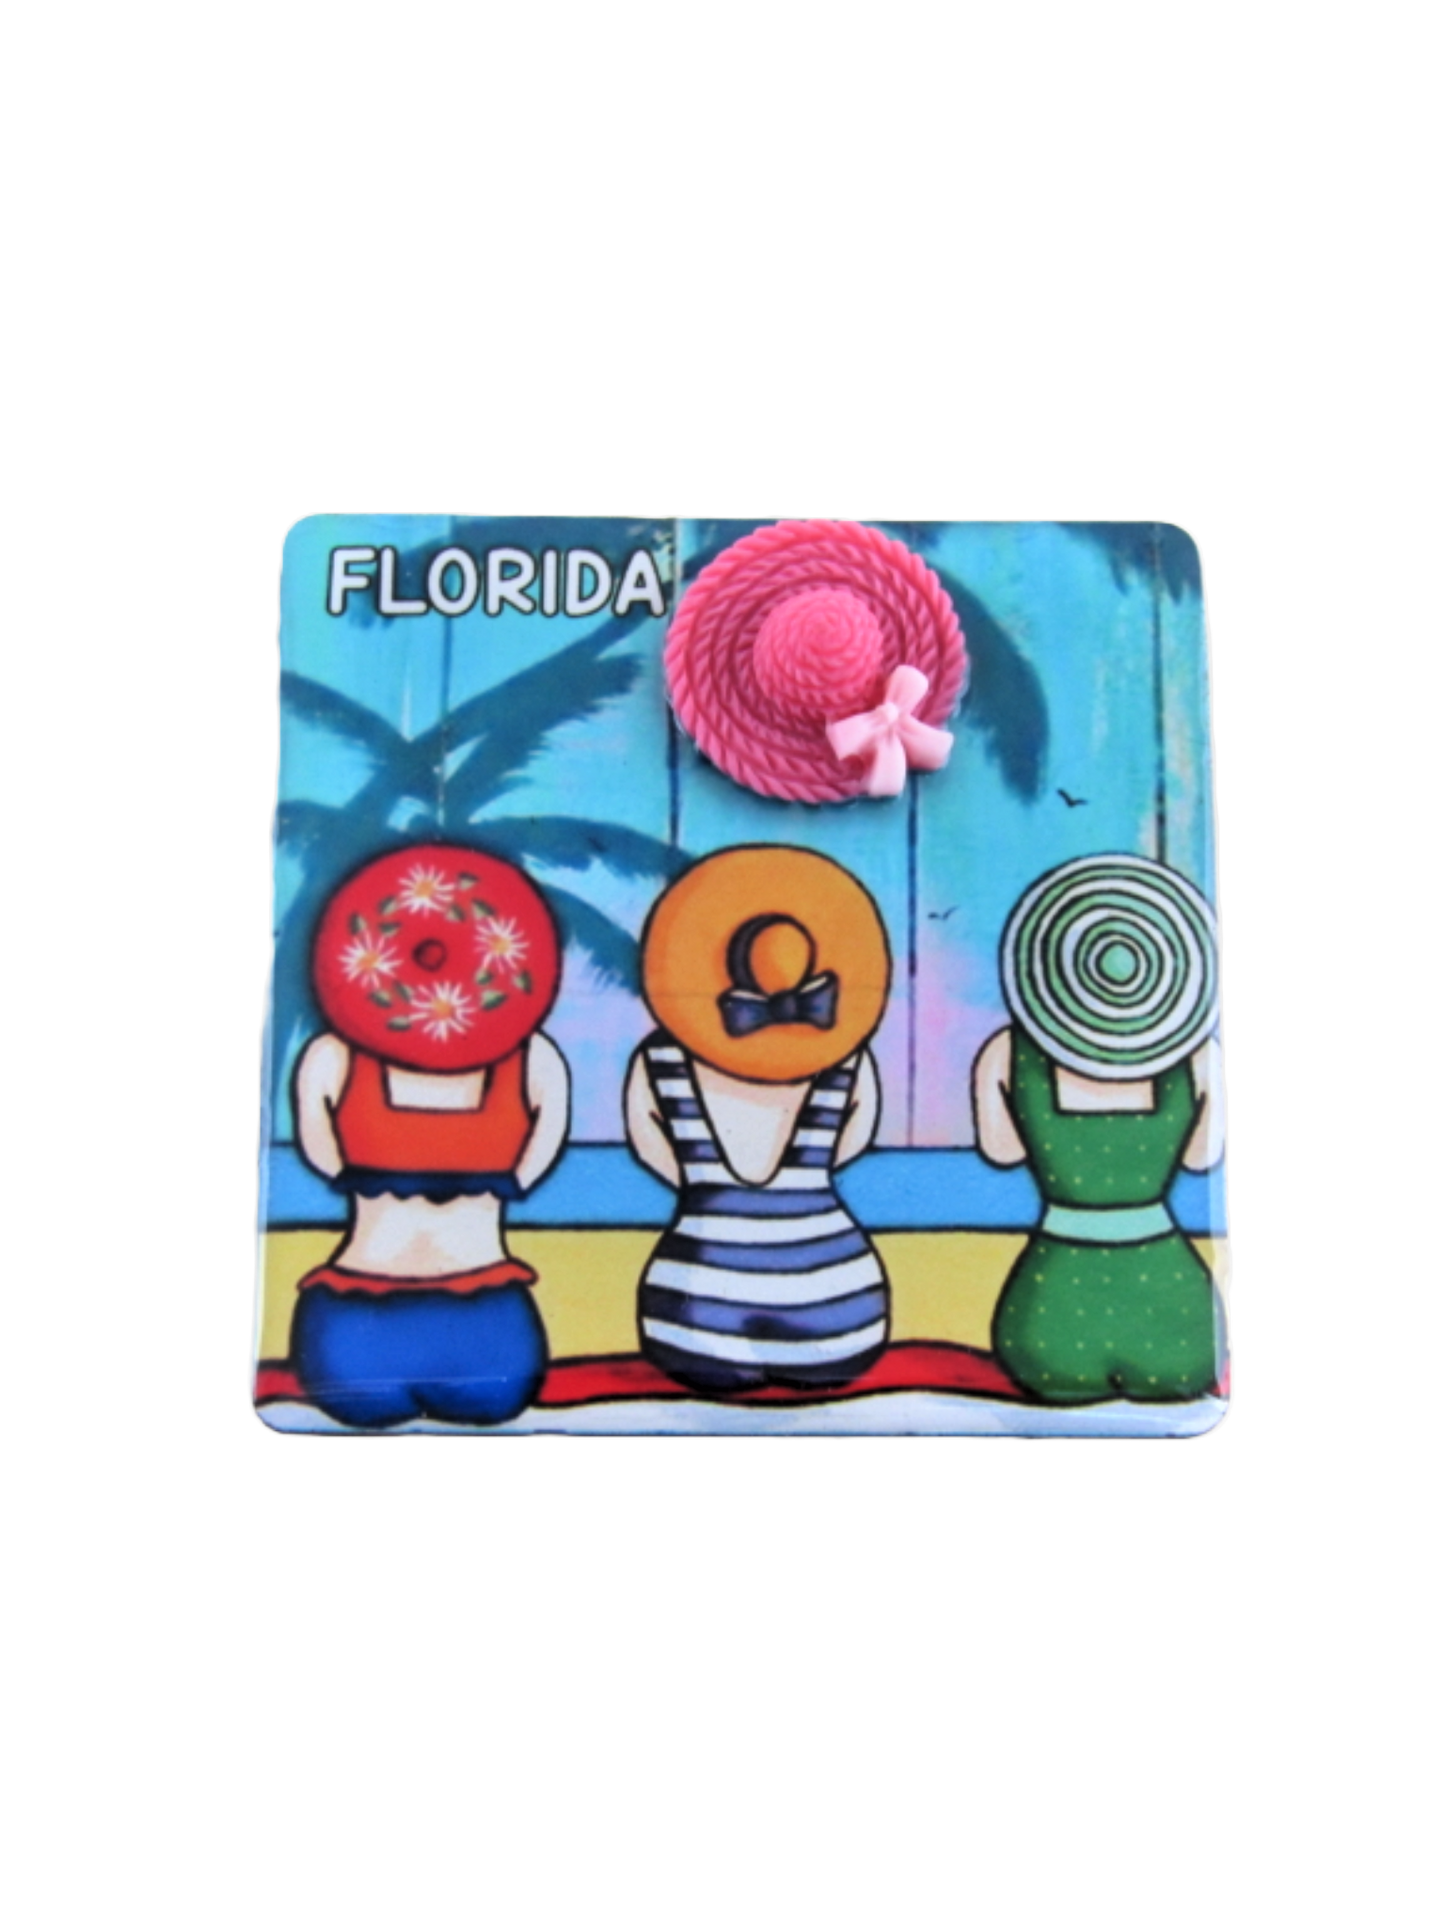 3DM1108 FLORIDA LADIES WITH HATS